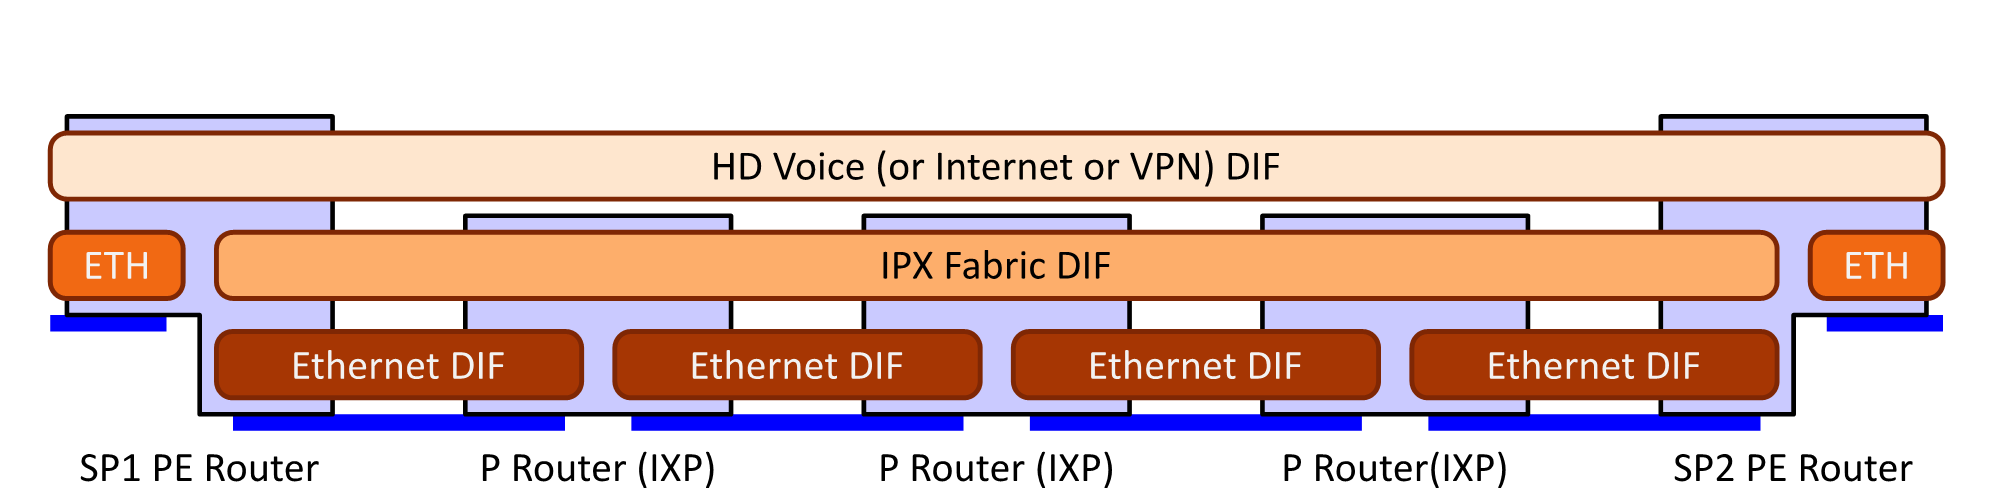 Network, CNOP, IXP: Schema